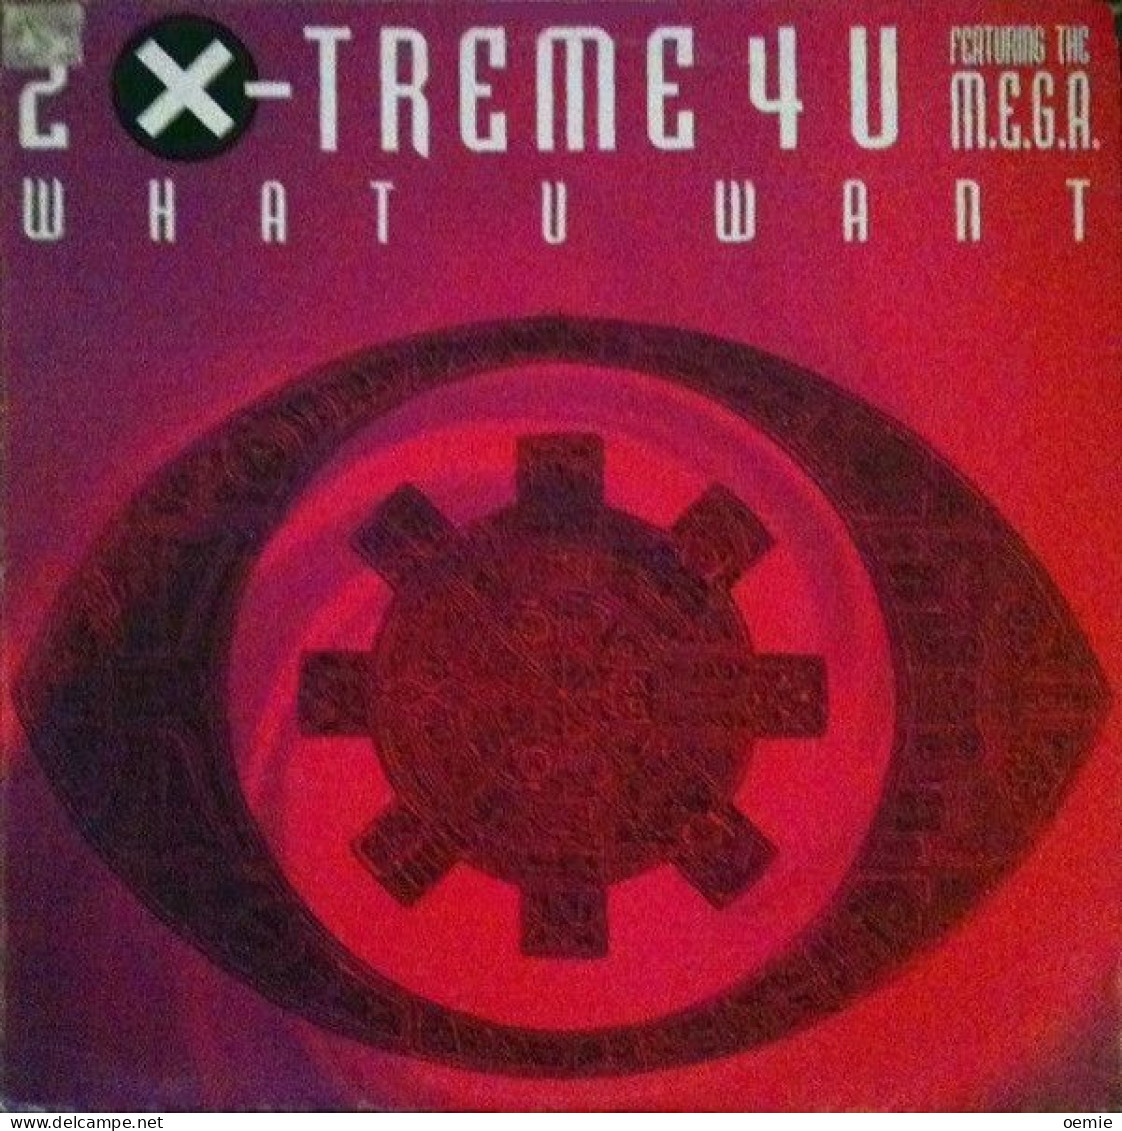 2 X TREME 4 U  WHAT U WANT - 45 T - Maxi-Single